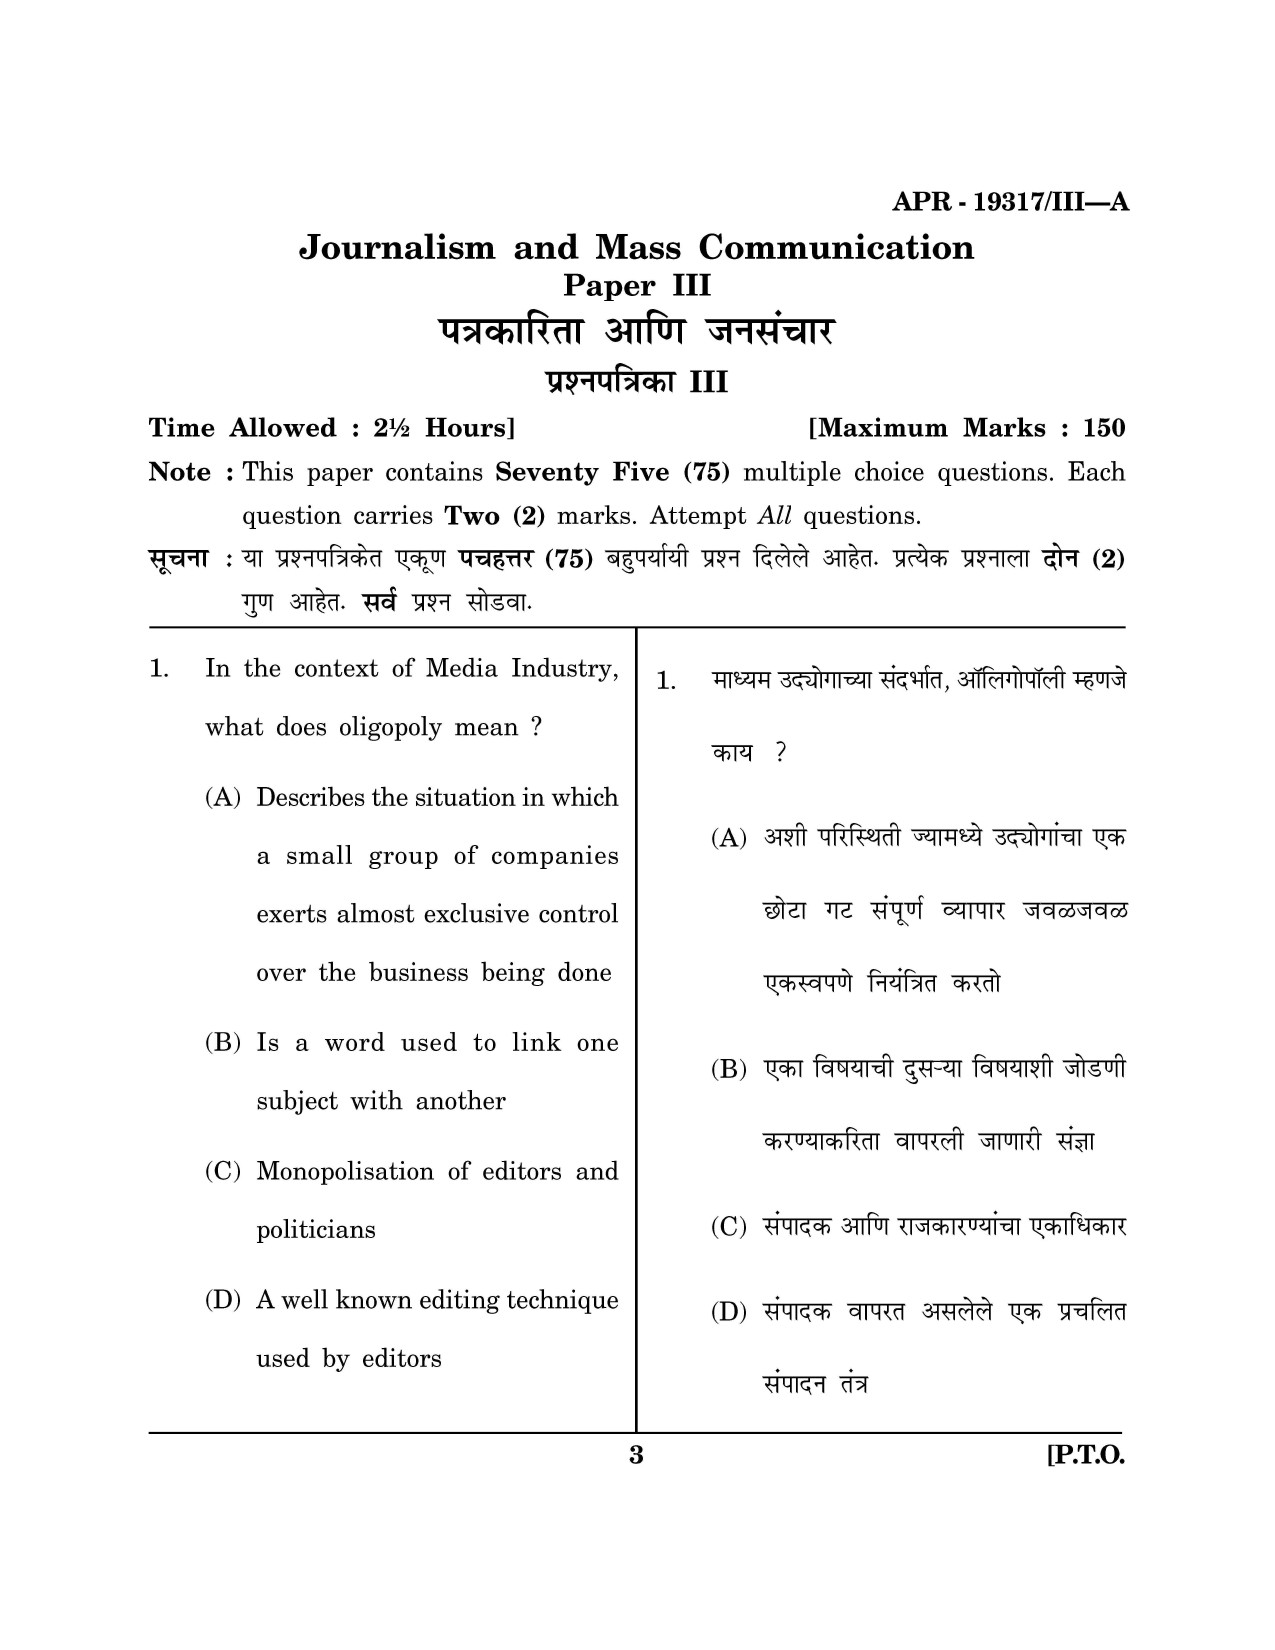 Maharashtra SET Journalism and Mass Communication Question Paper III April 2017 2